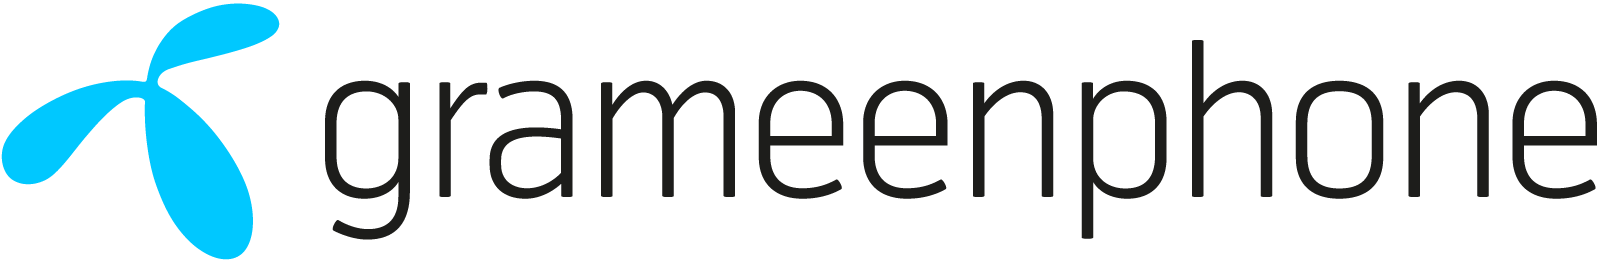 Grameenphone logo